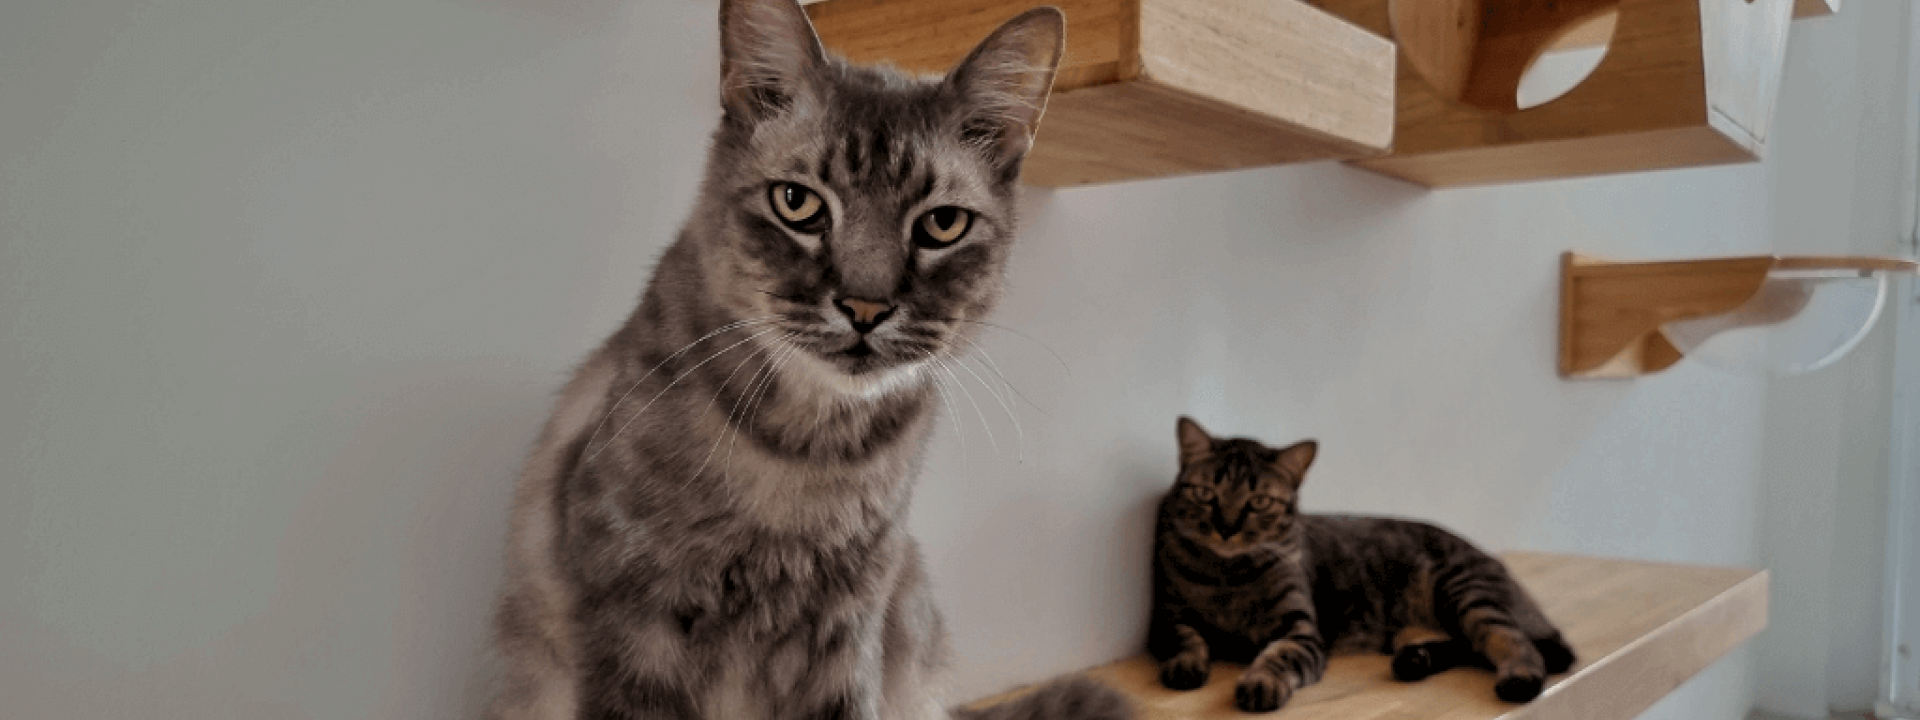 make your home more senior cat friendly